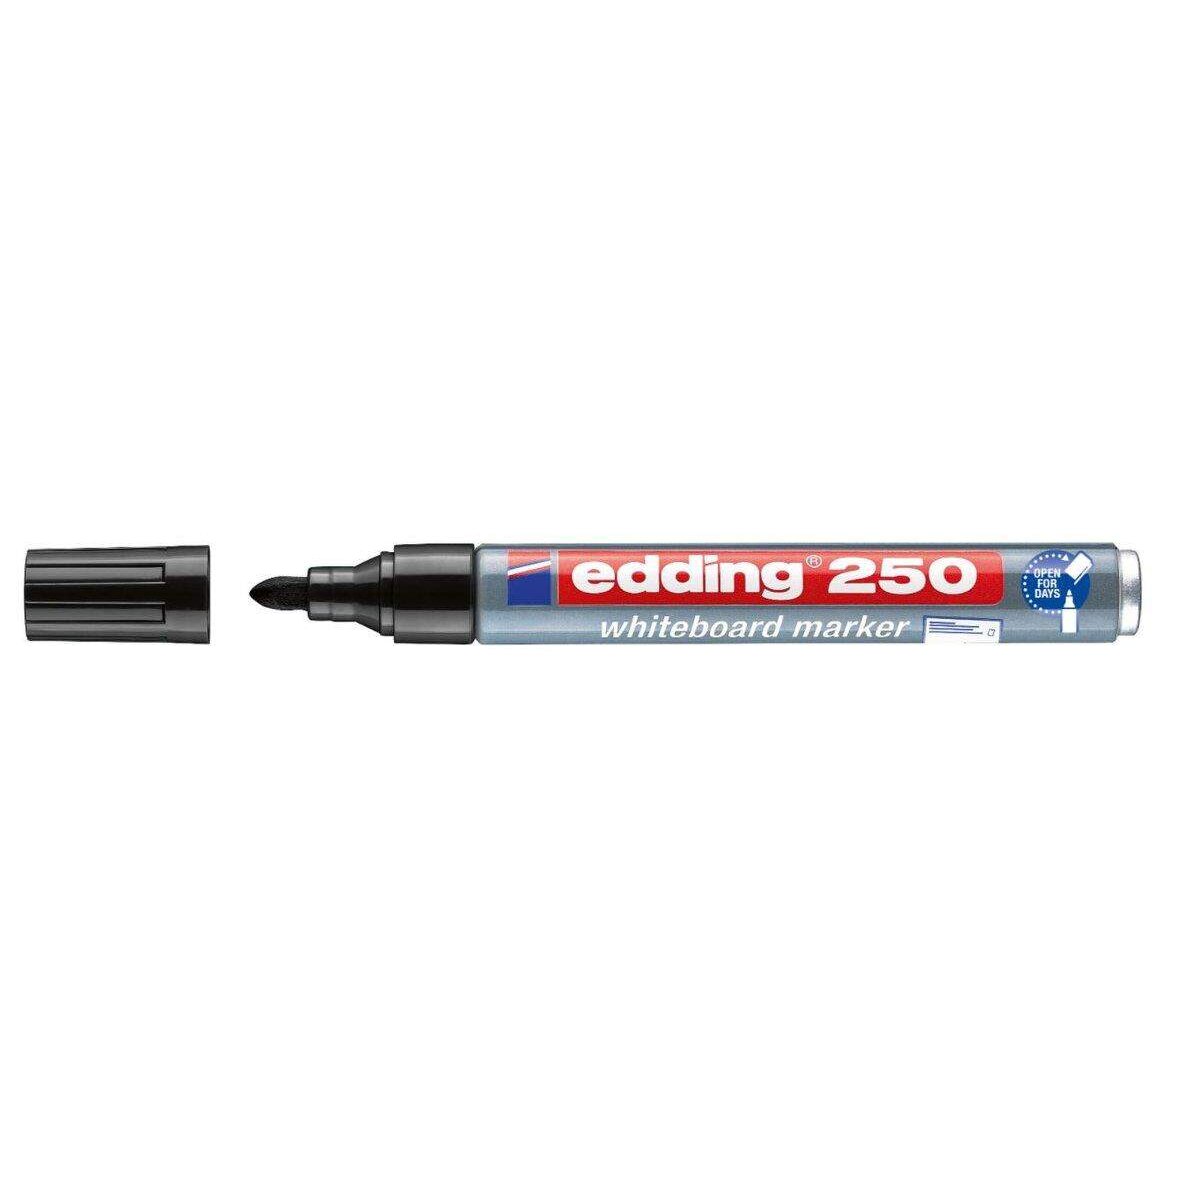 edding 250 Whiteboardmarker 1.5-3mm, schwarz